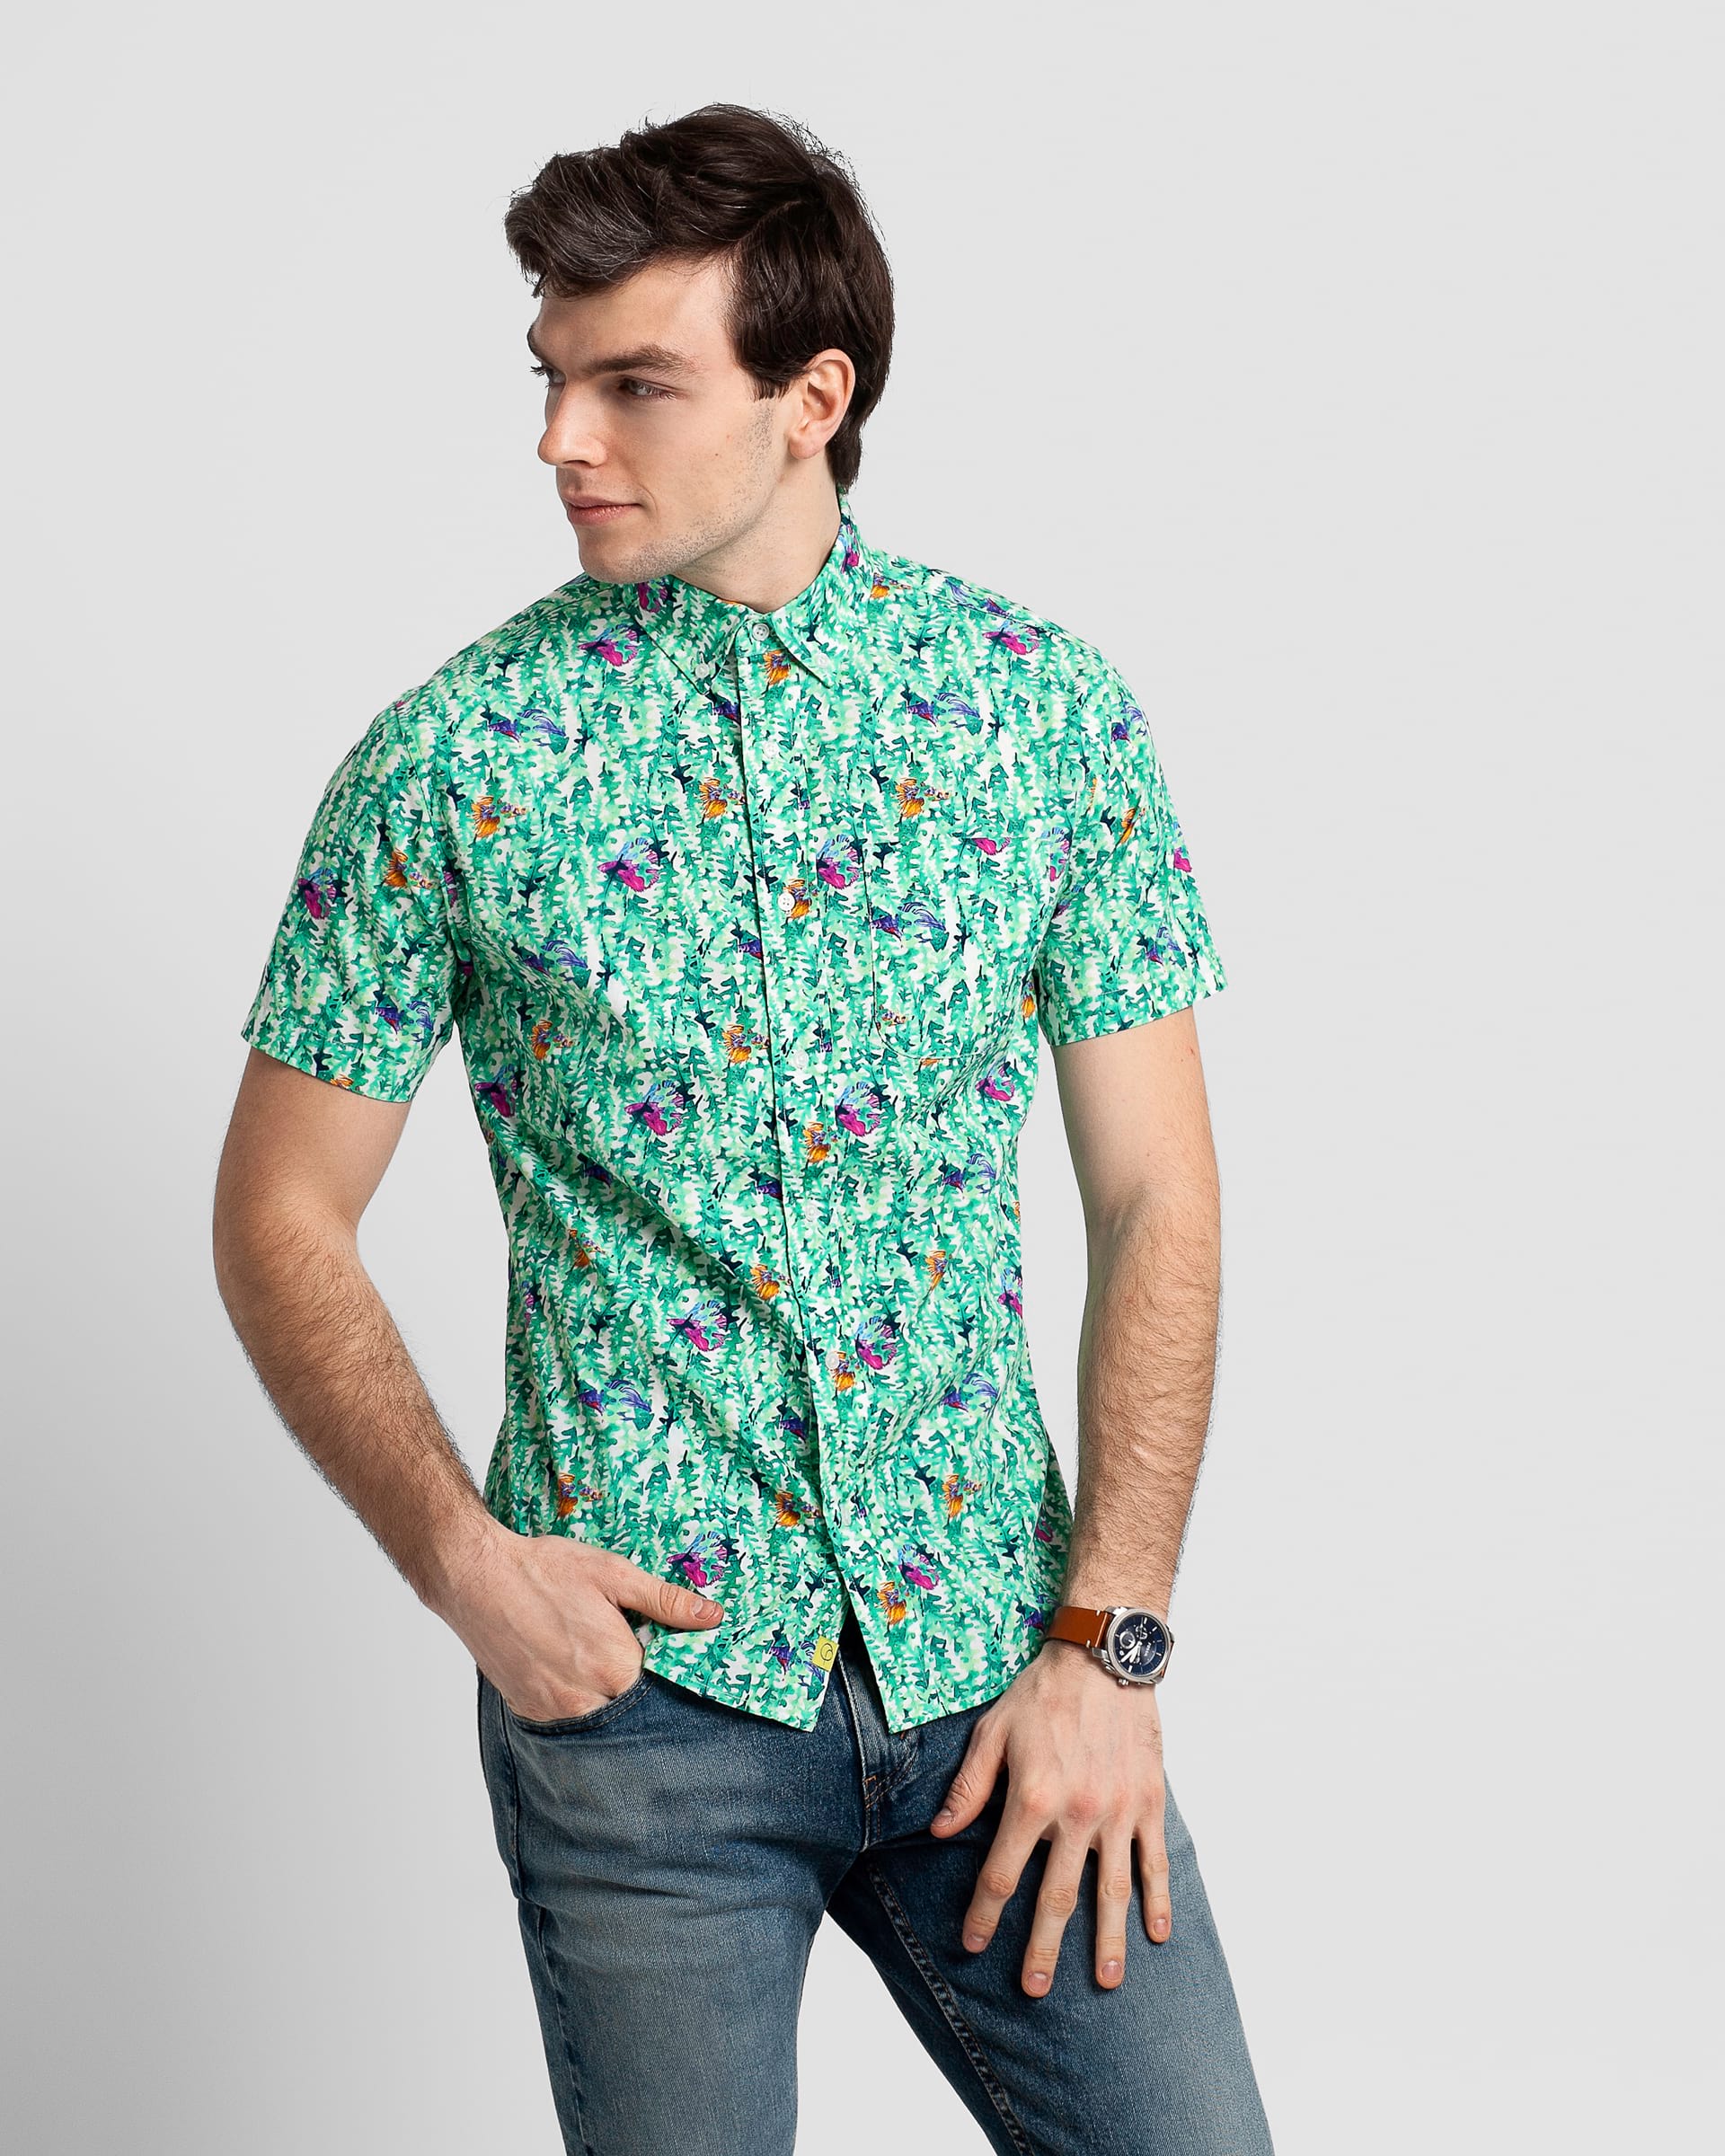 Fish Print Shirt > Casual Shirt > Button Up Shirt